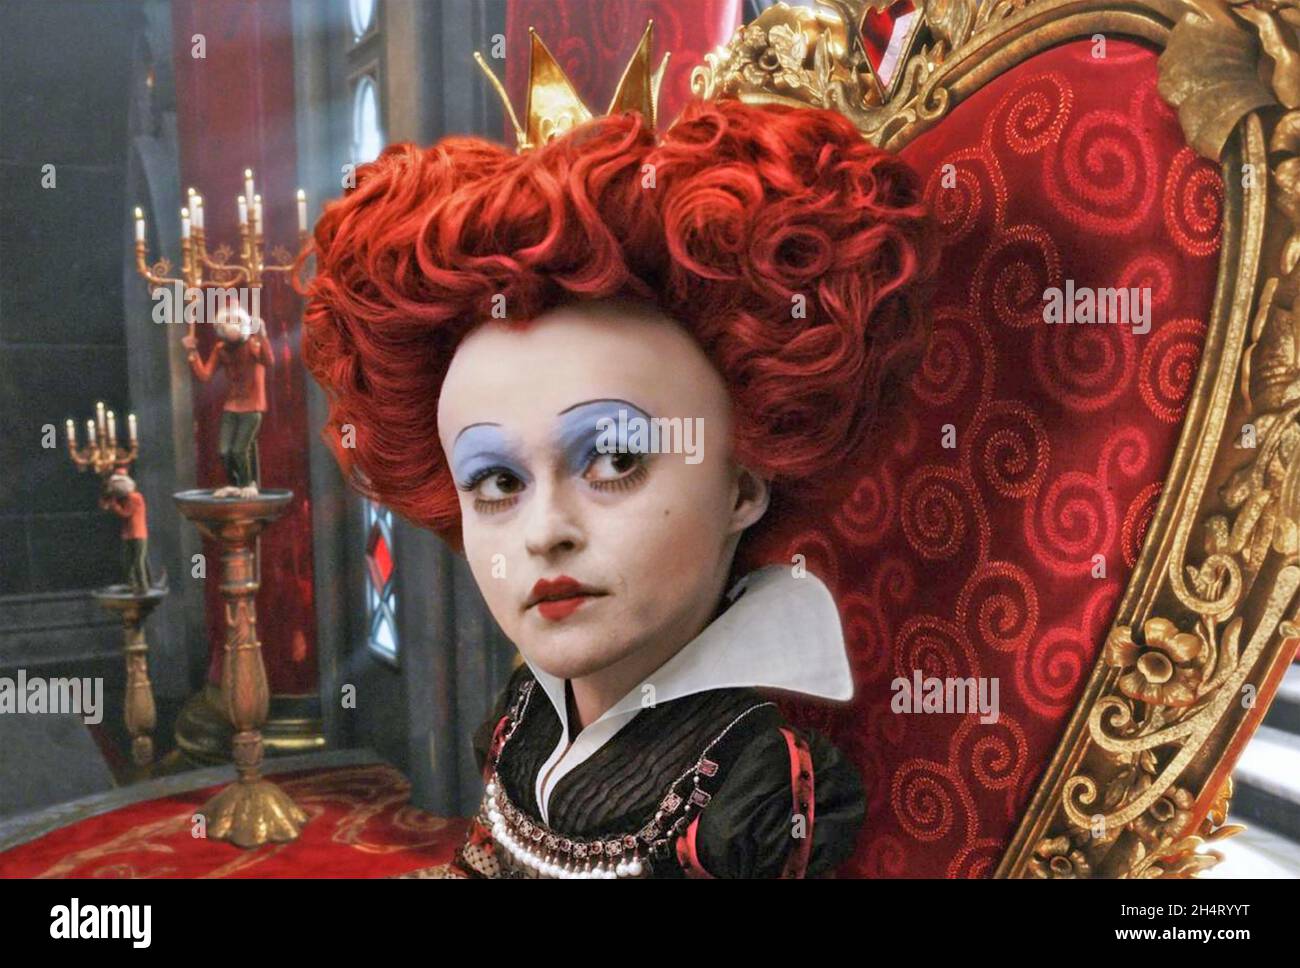 ALICE IN WONDERLAND 2010 Walt Disney Studios Motion Pictures film with Helena Bonham Carter as the Red Queen Stock Photo